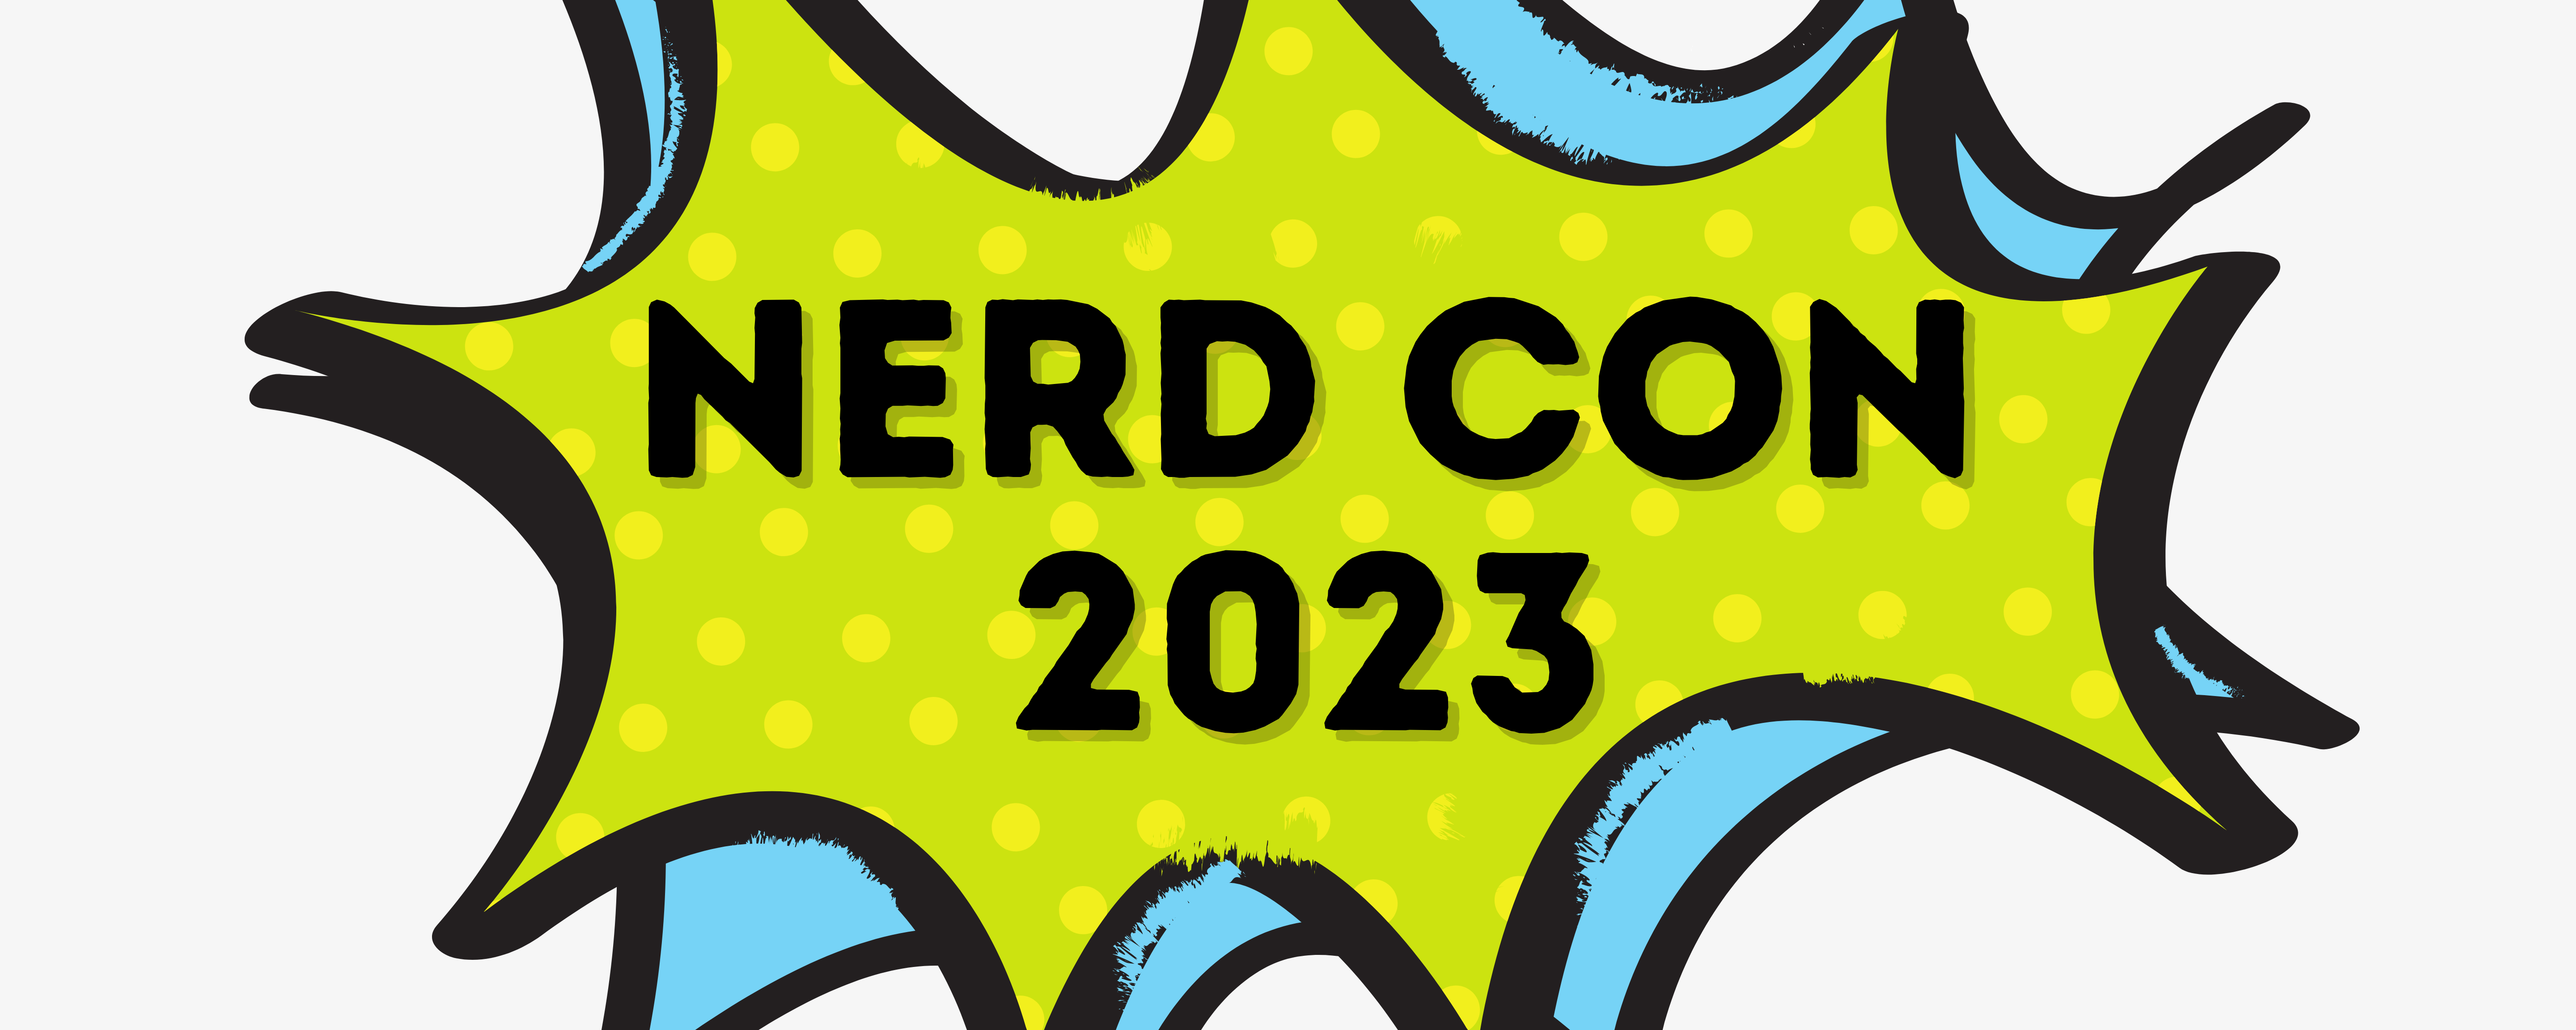 nerd con 2023